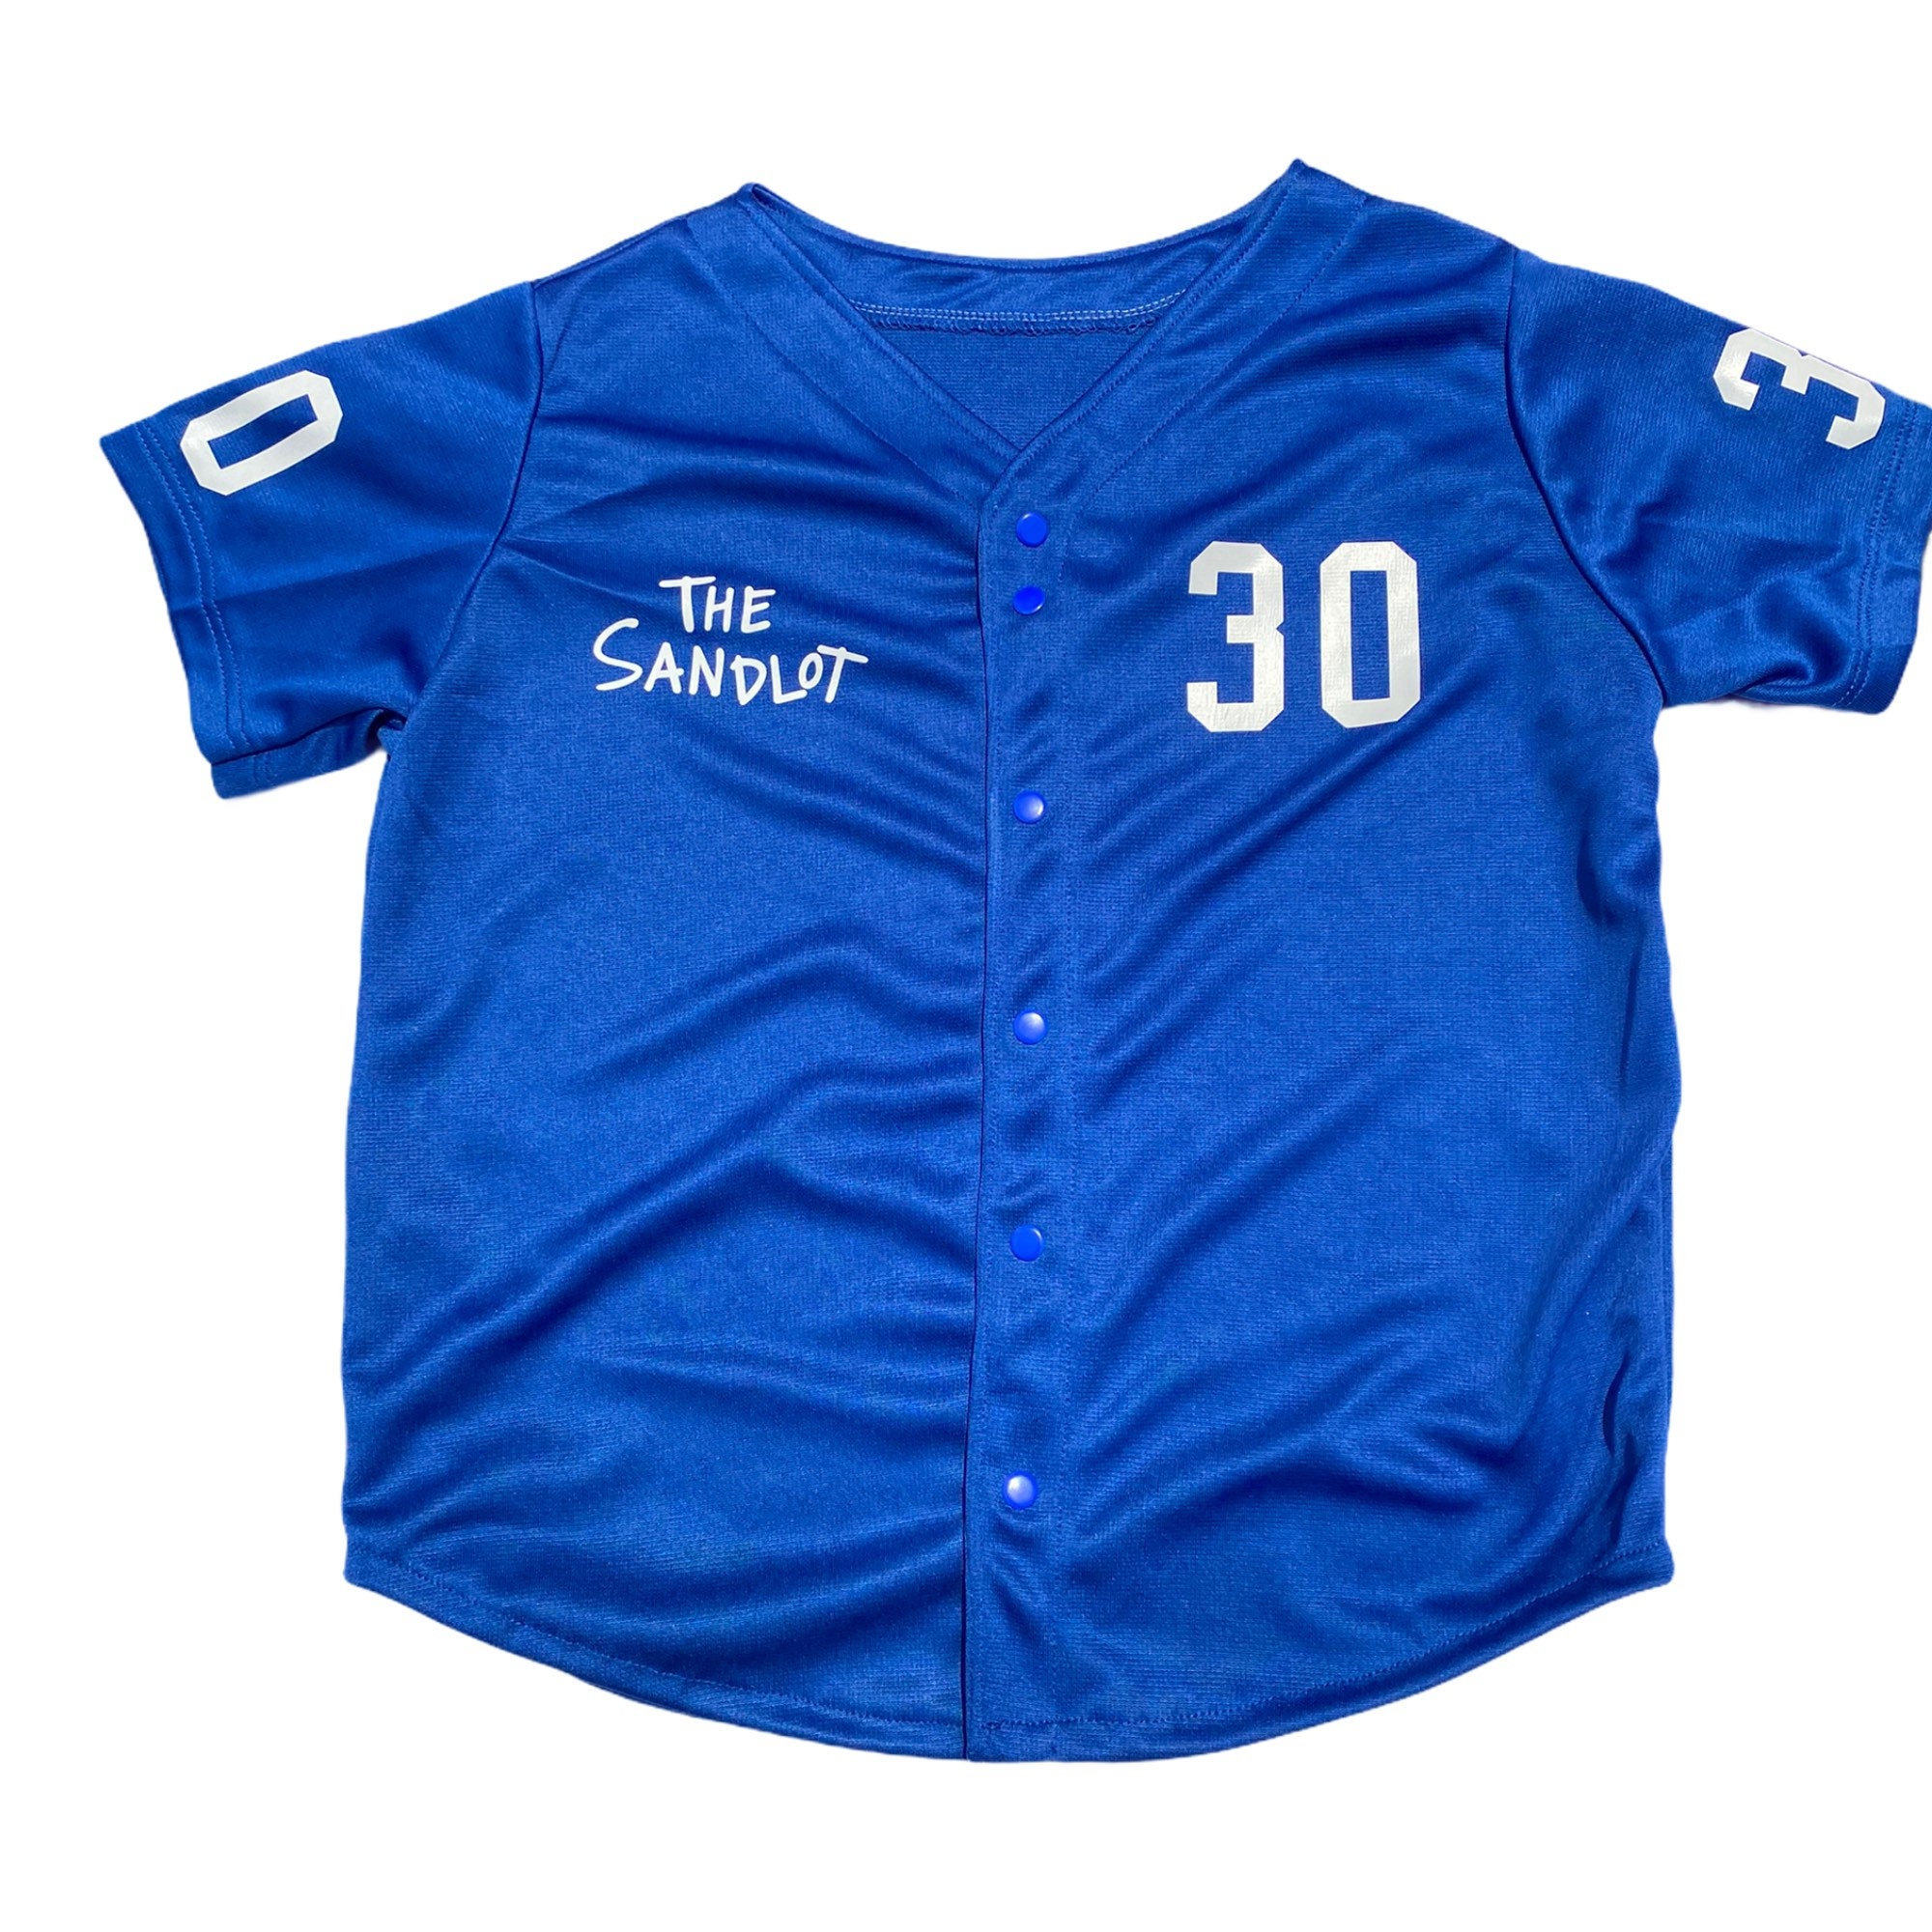 Sandlot Shirt for Kids Royal Blue Birthday Jersey Looks 